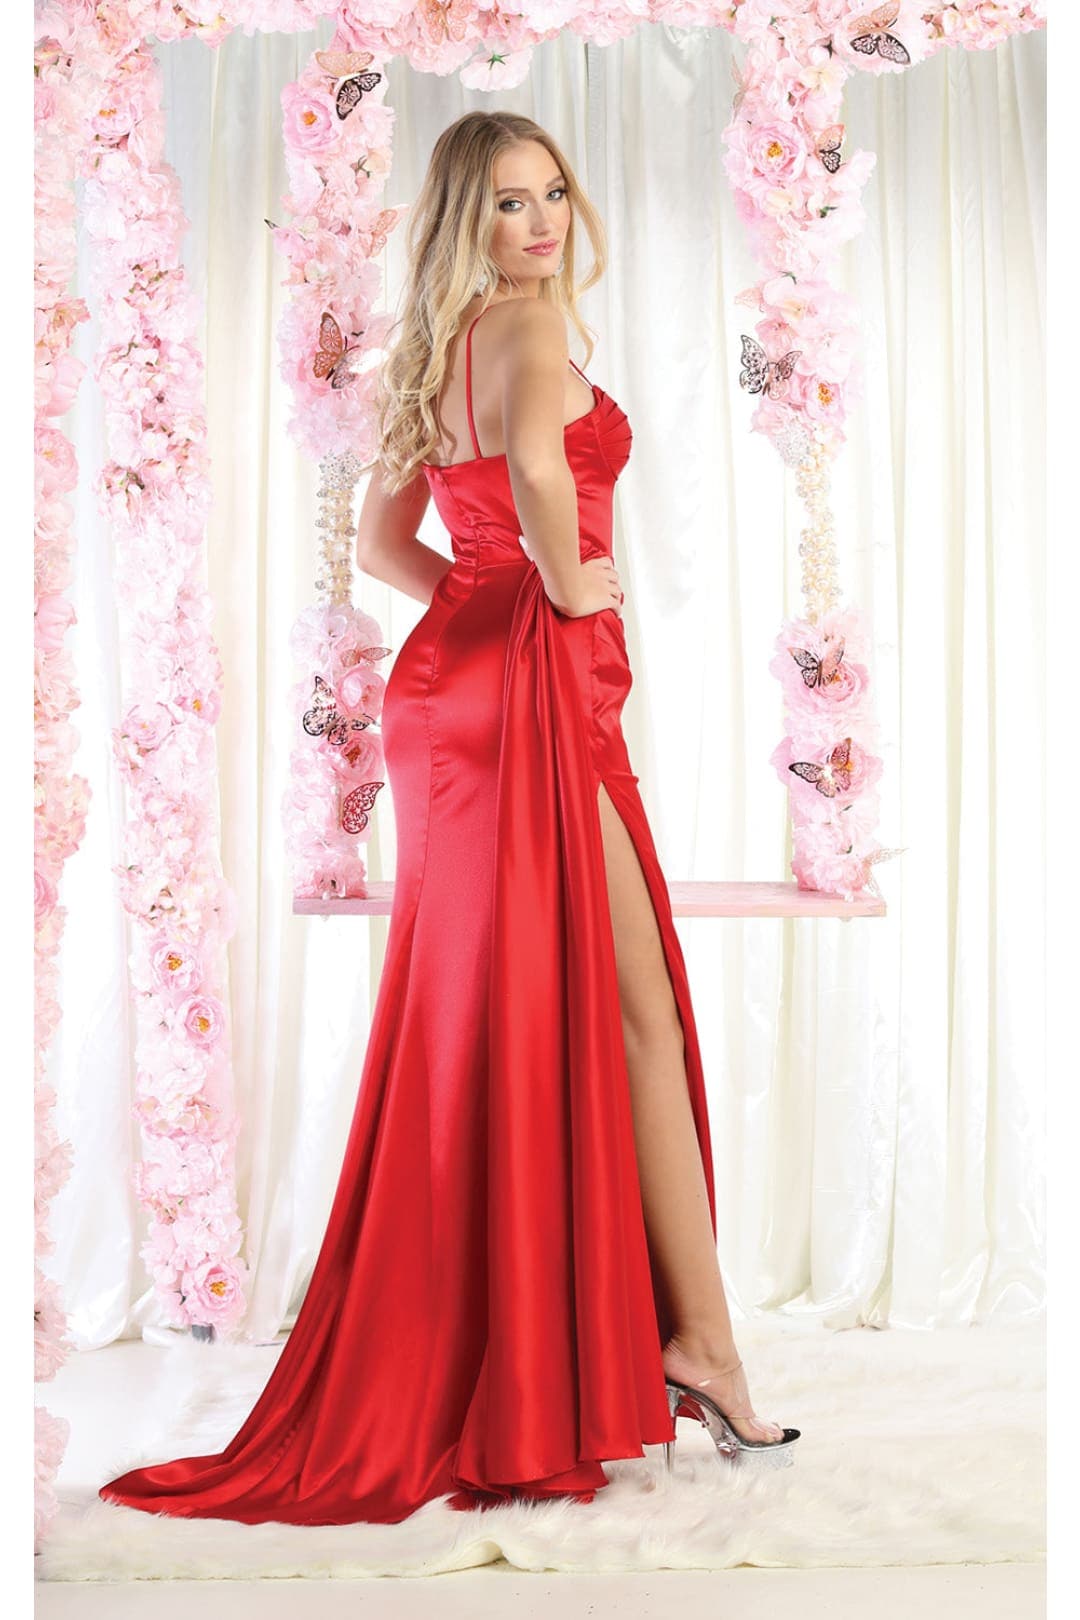 Royal Queen RQ7960 Satin Simple Bridesmaids Dress - Dress